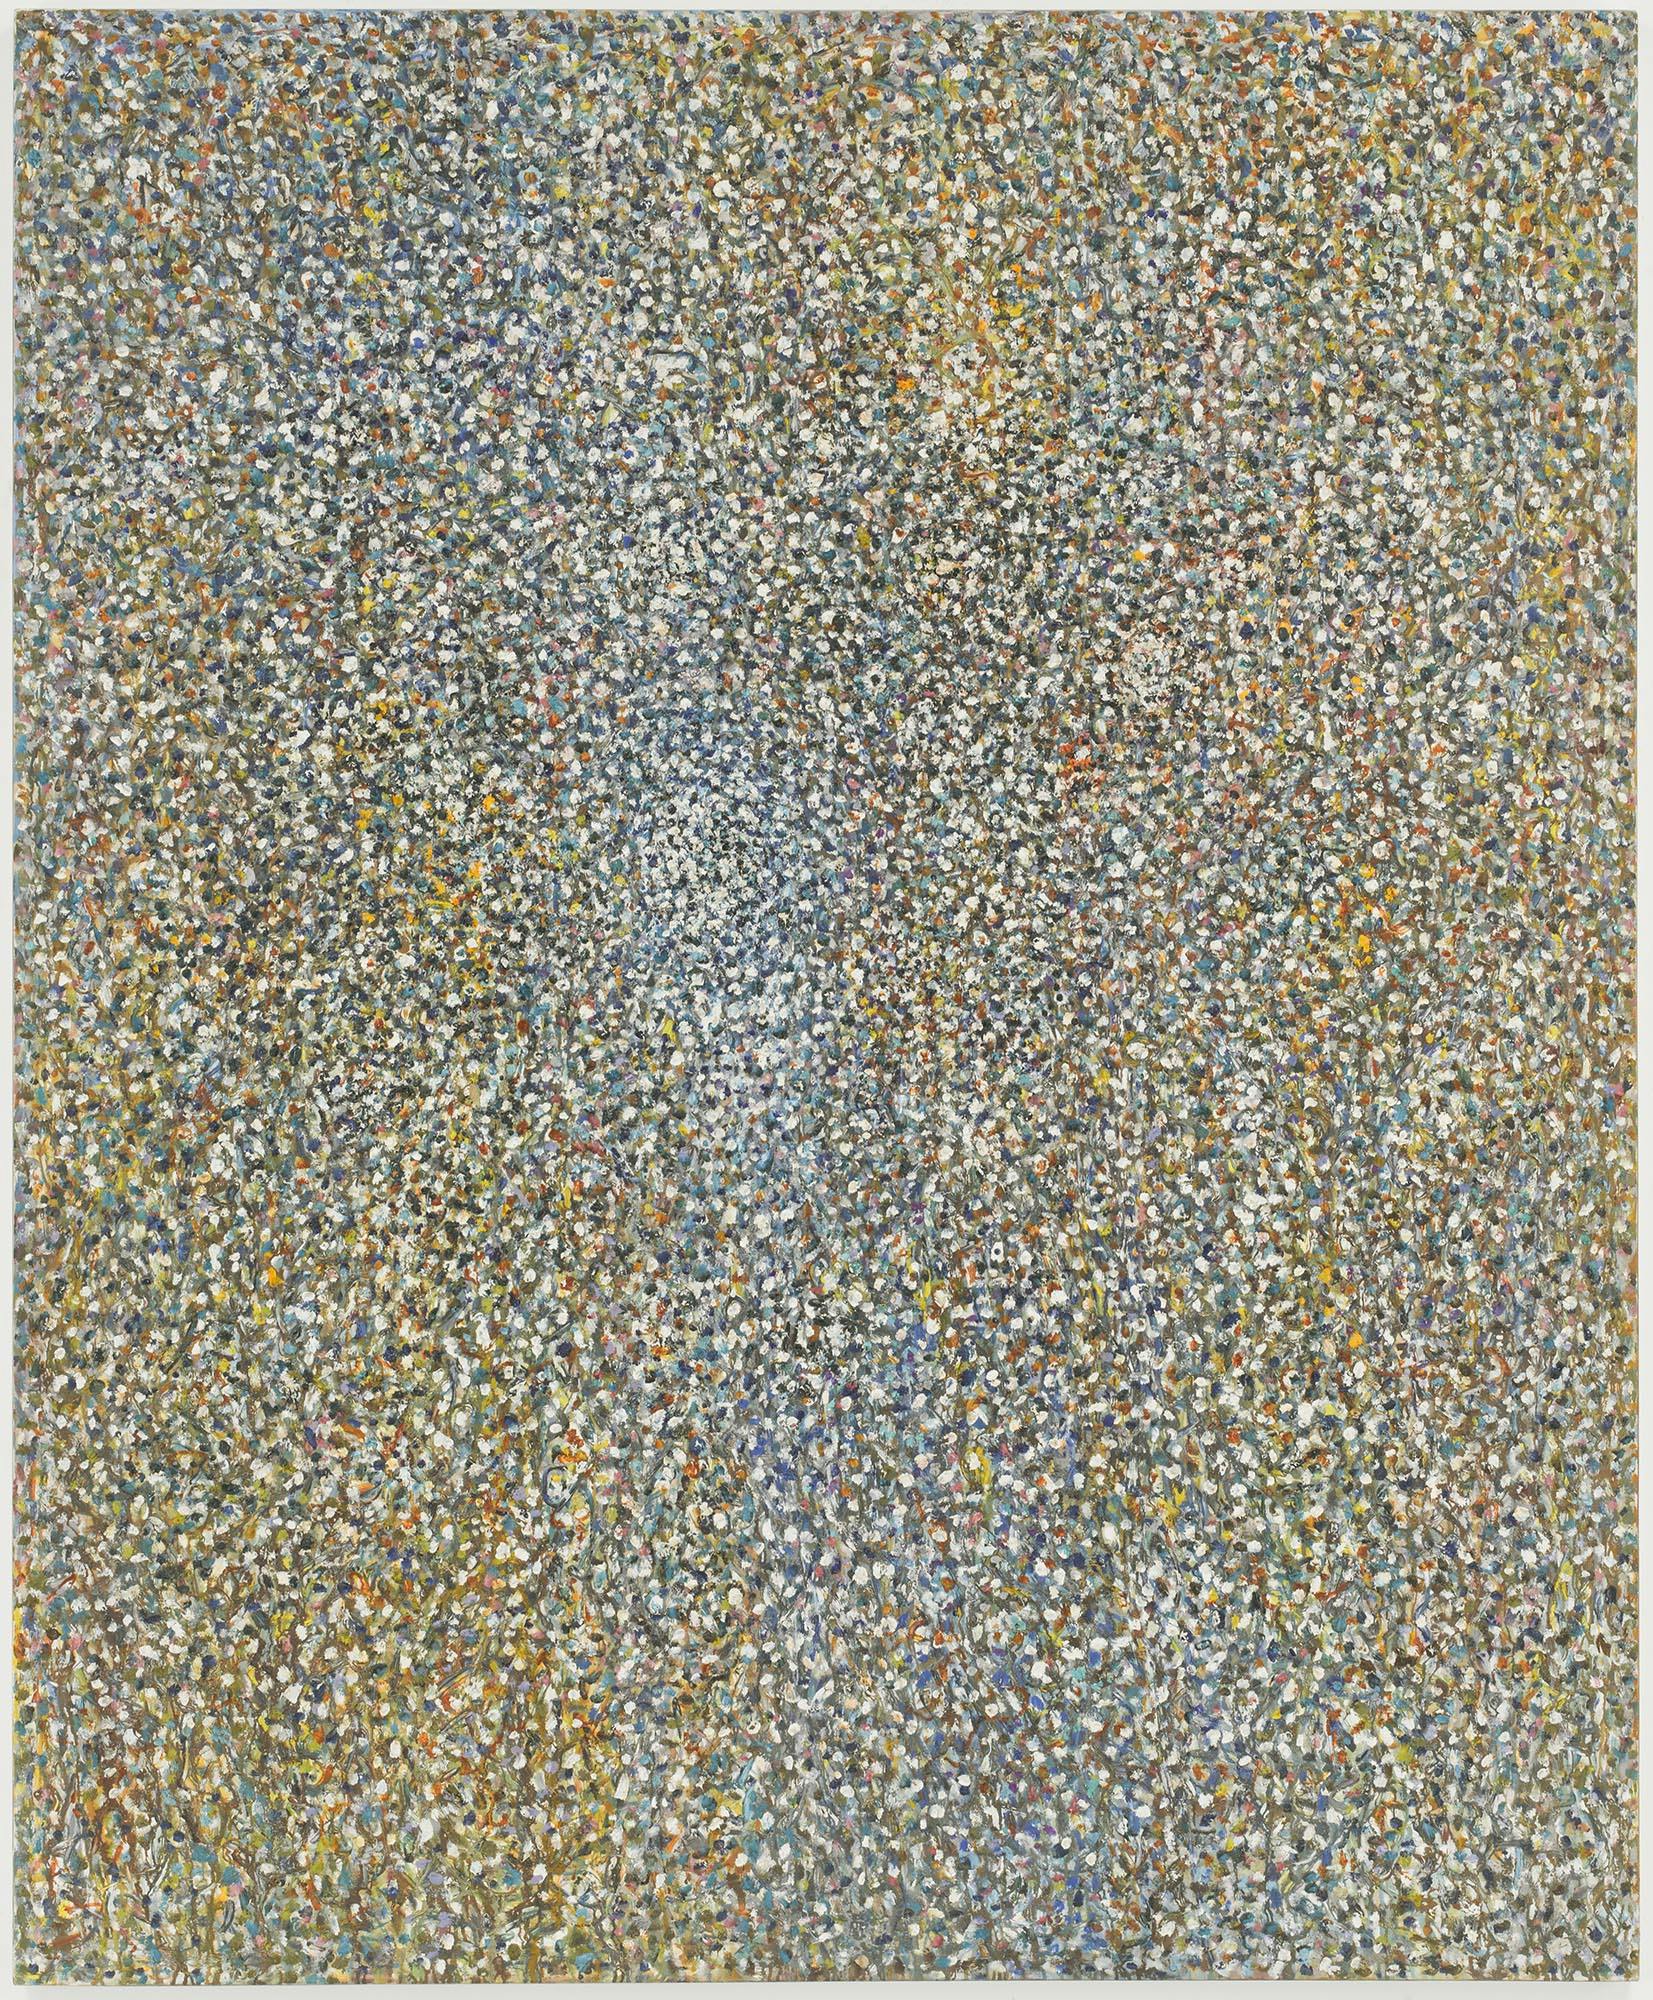 Meditation on the Drifting Stars
1962–63
Oil on linen, 95 1/2 x 79 in. 
(242.6 x 200.7 cm)
 – The Richard Pousette-Dart Foundation